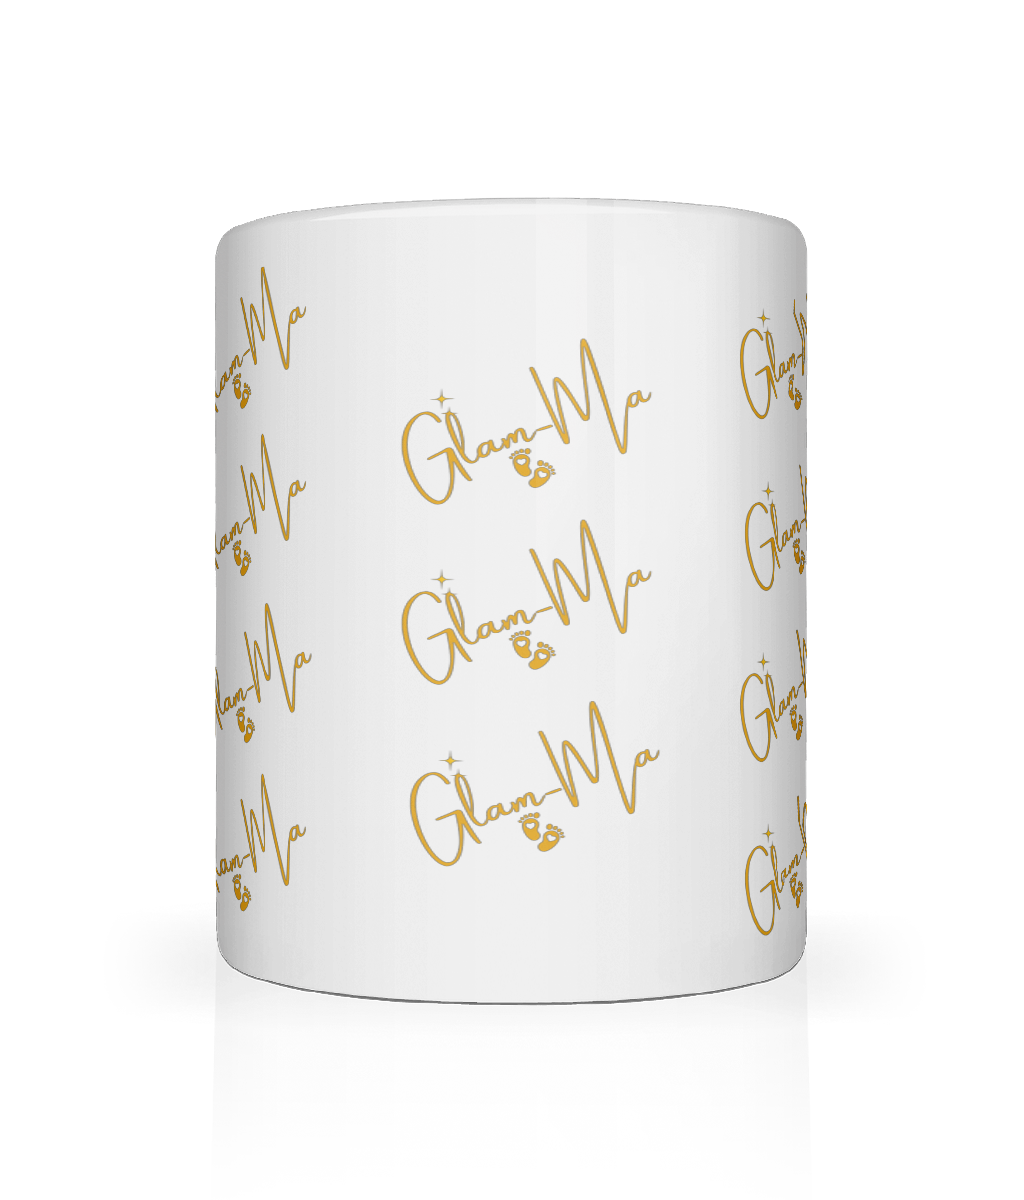 Glam-Ma, Full Wrap Logo, Ceramic Cup, Mug, White/Gold Logo, 11oz